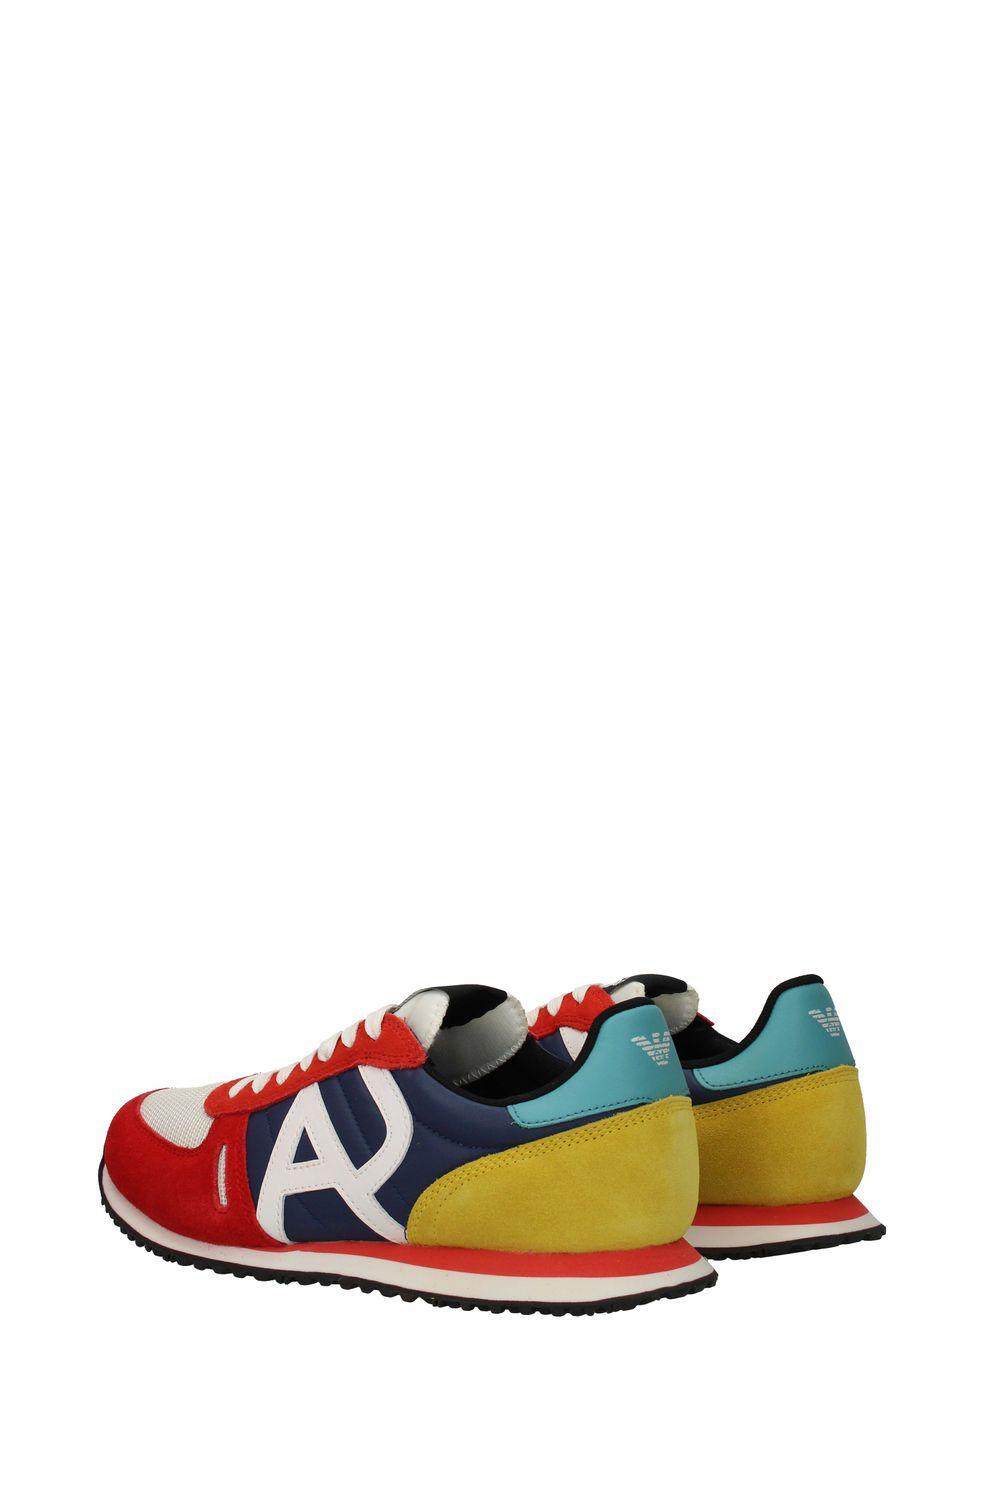 Armani Jeans Sneakers Men Multicolor for Men | Lyst